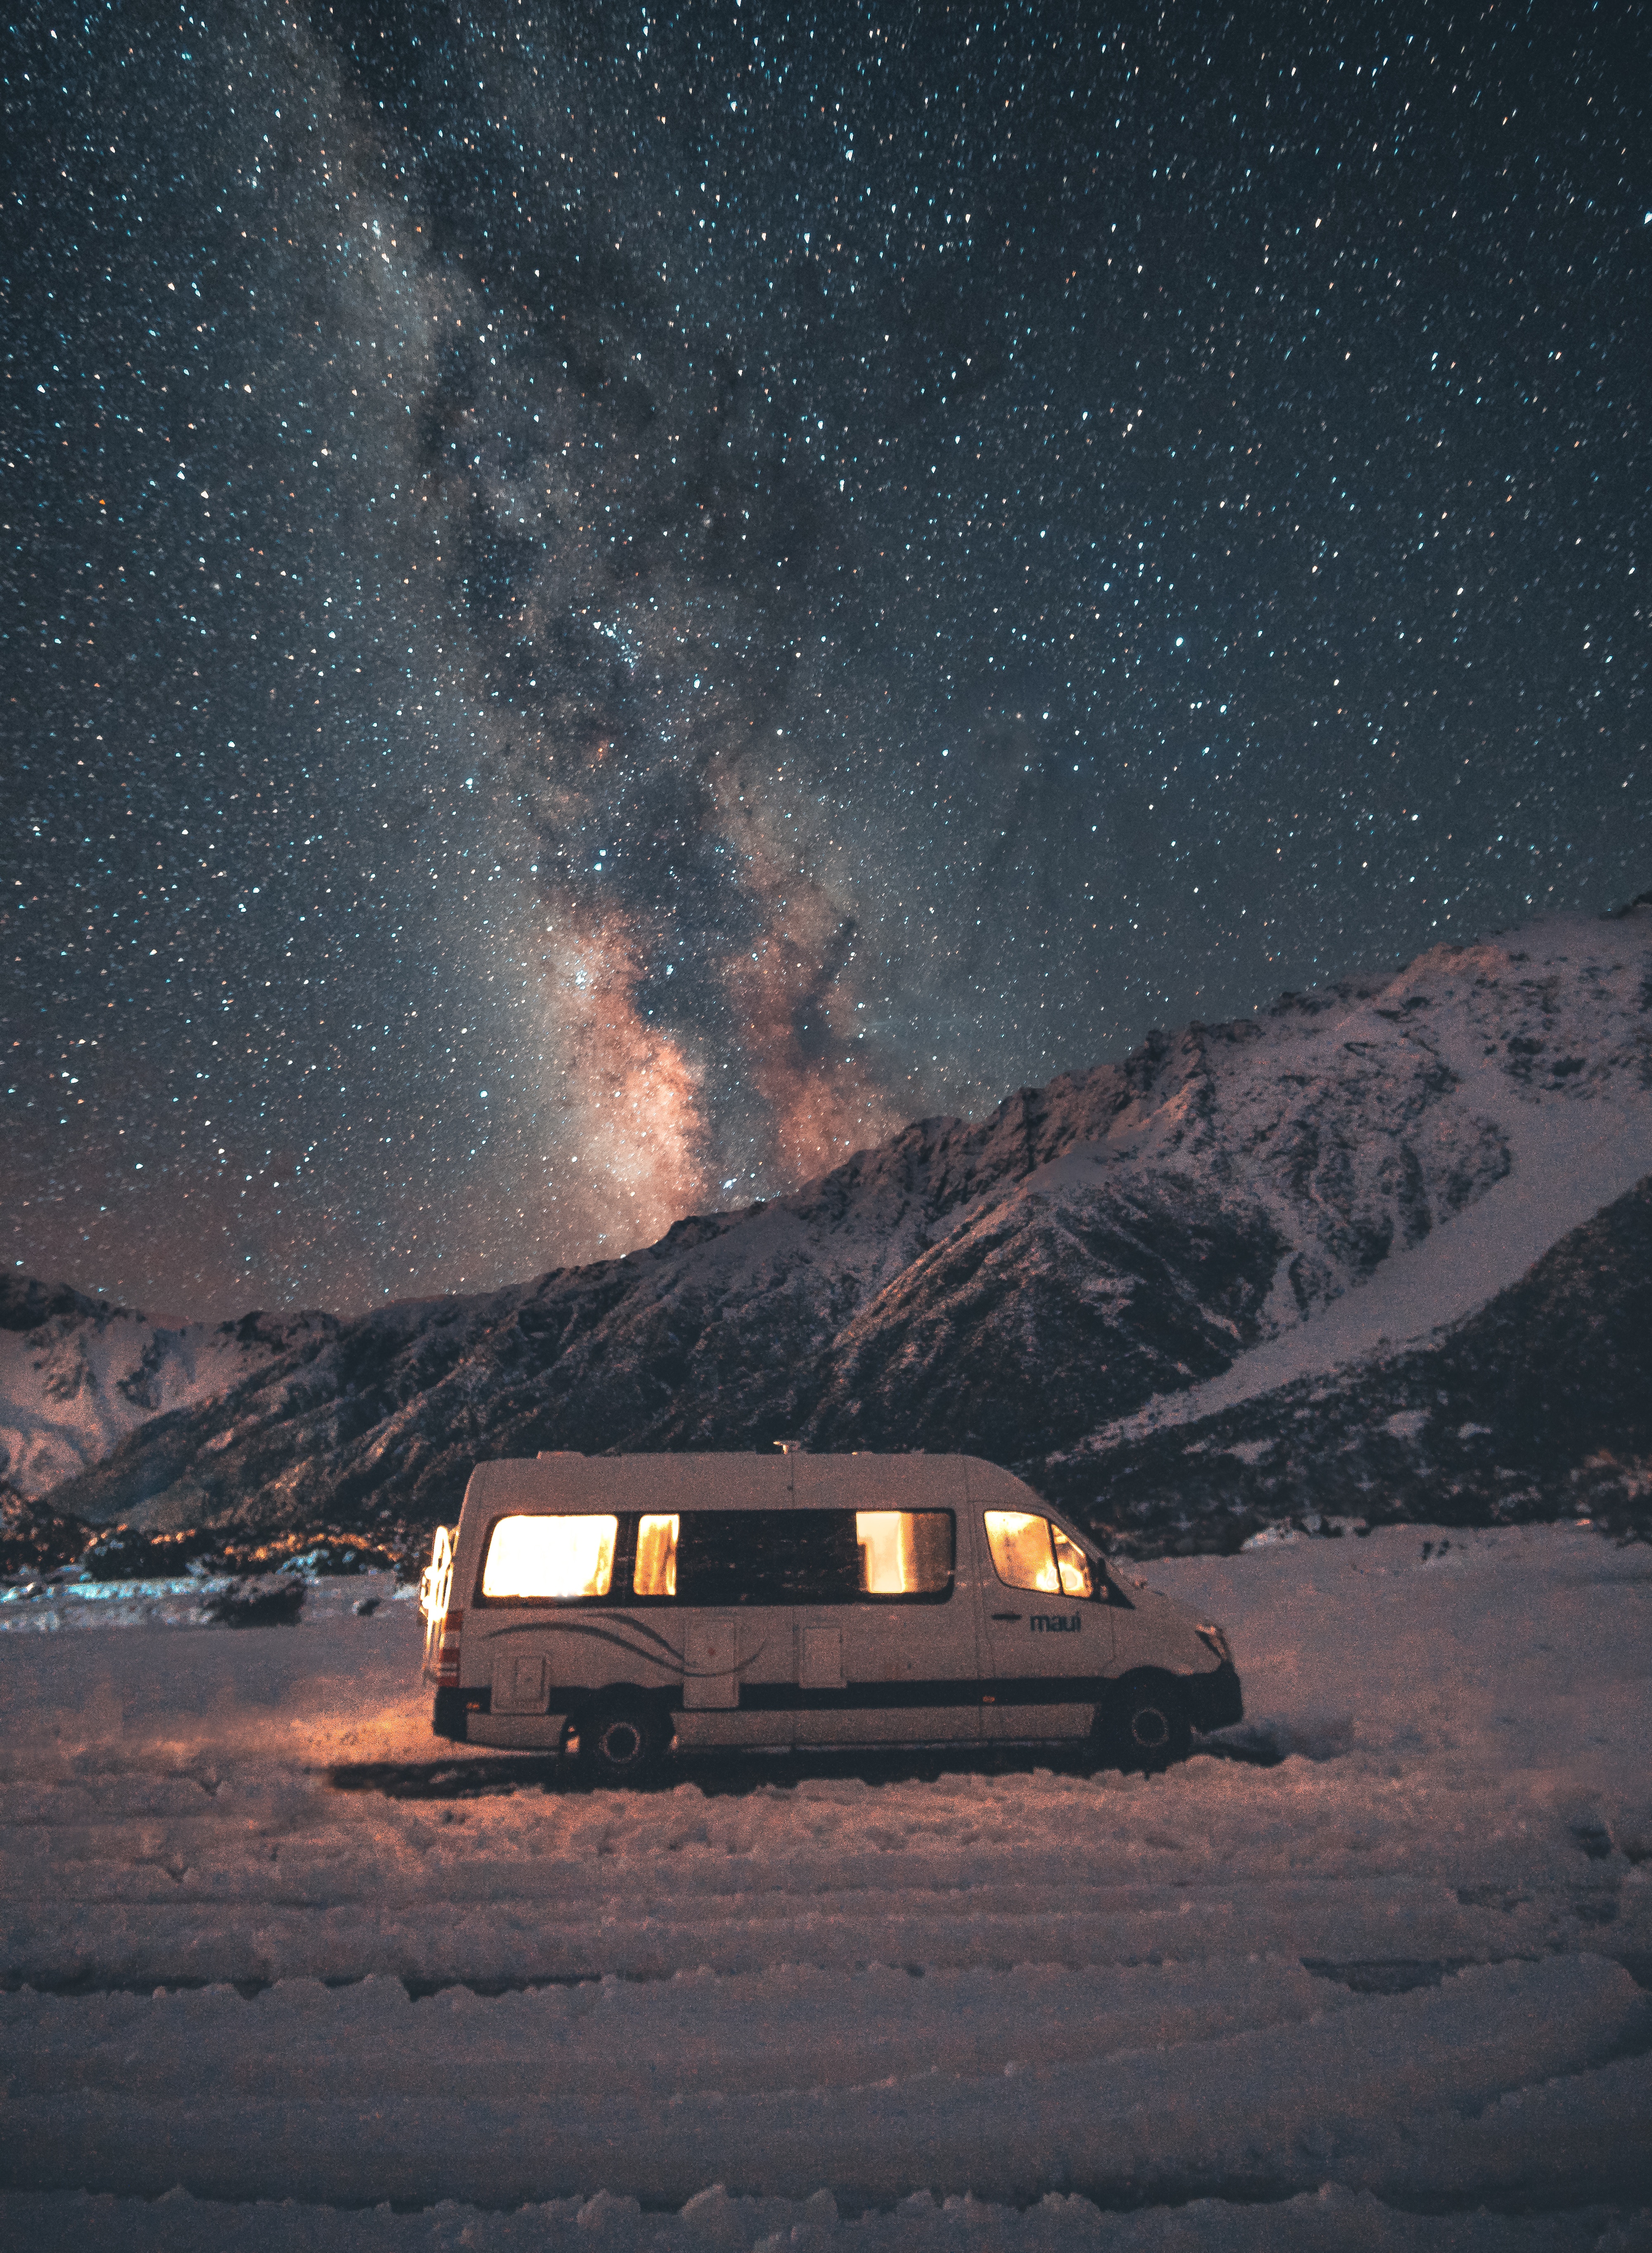 Free HD starry sky, landscape, nature, mountains, night, journey, van